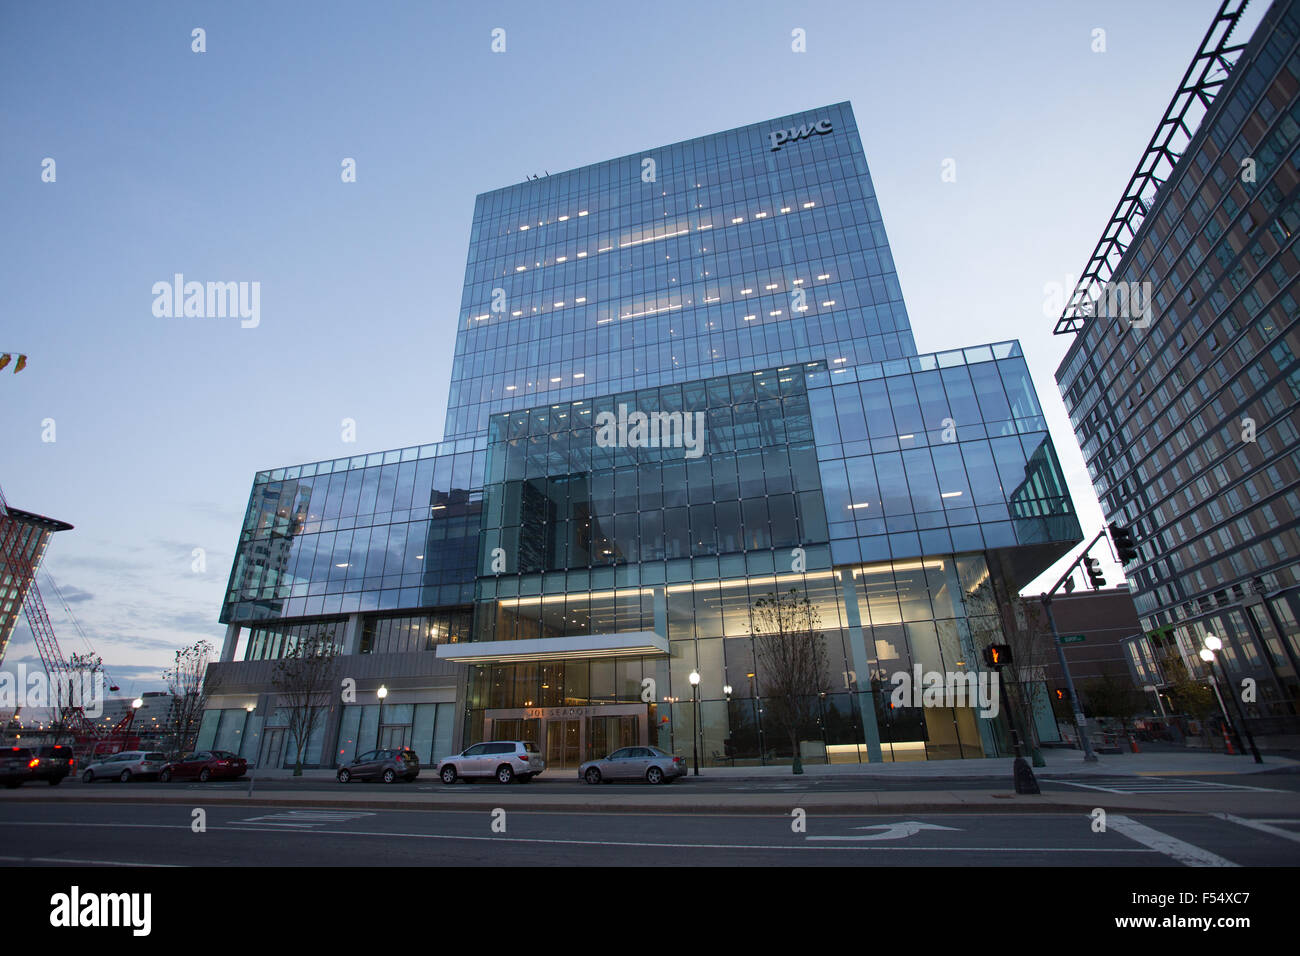 boston pwc glass office building Stock Photo